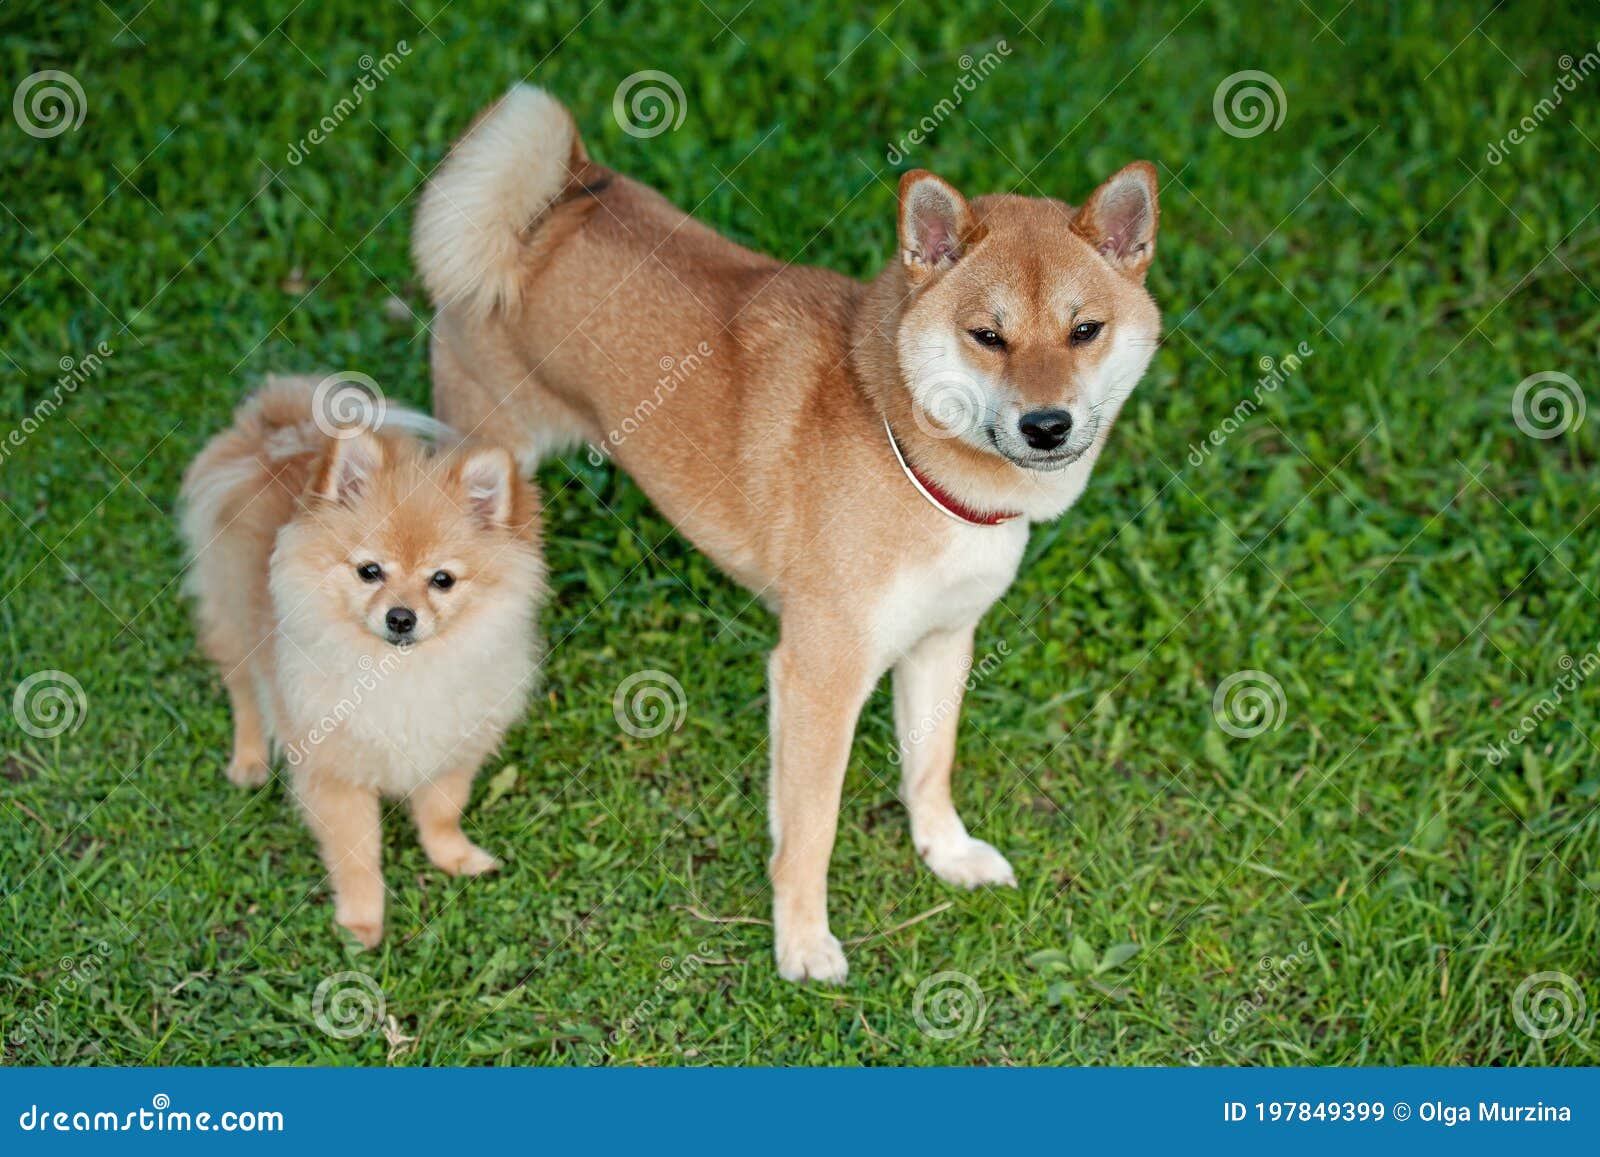 Bryde igennem Investere grit Loyal Friend.Shiba Inu and Pomeranian Puppy Stock Image - Image of  beautiful, loyal: 197849399